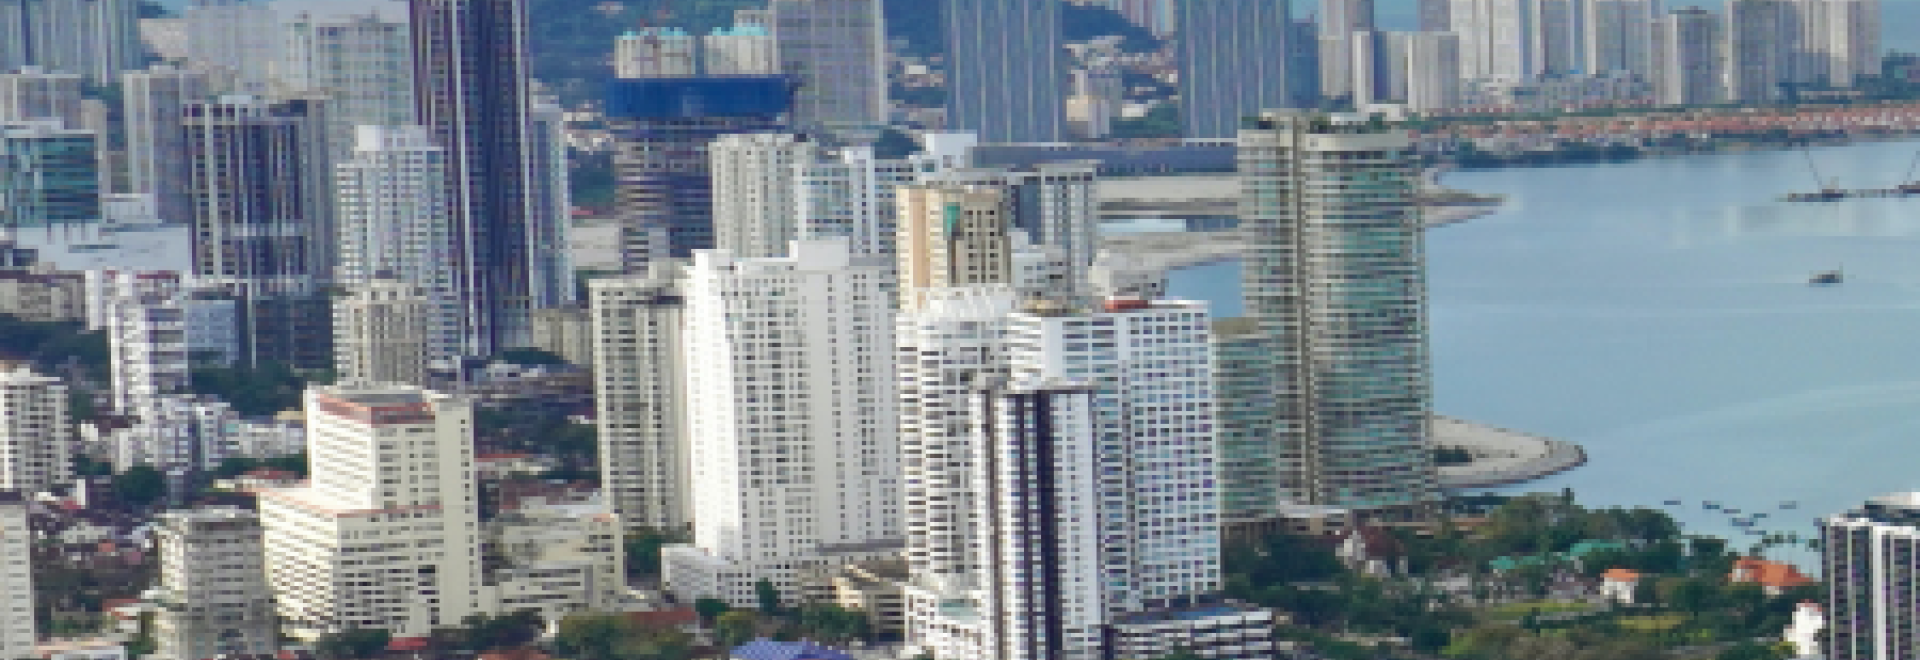 Buildings view